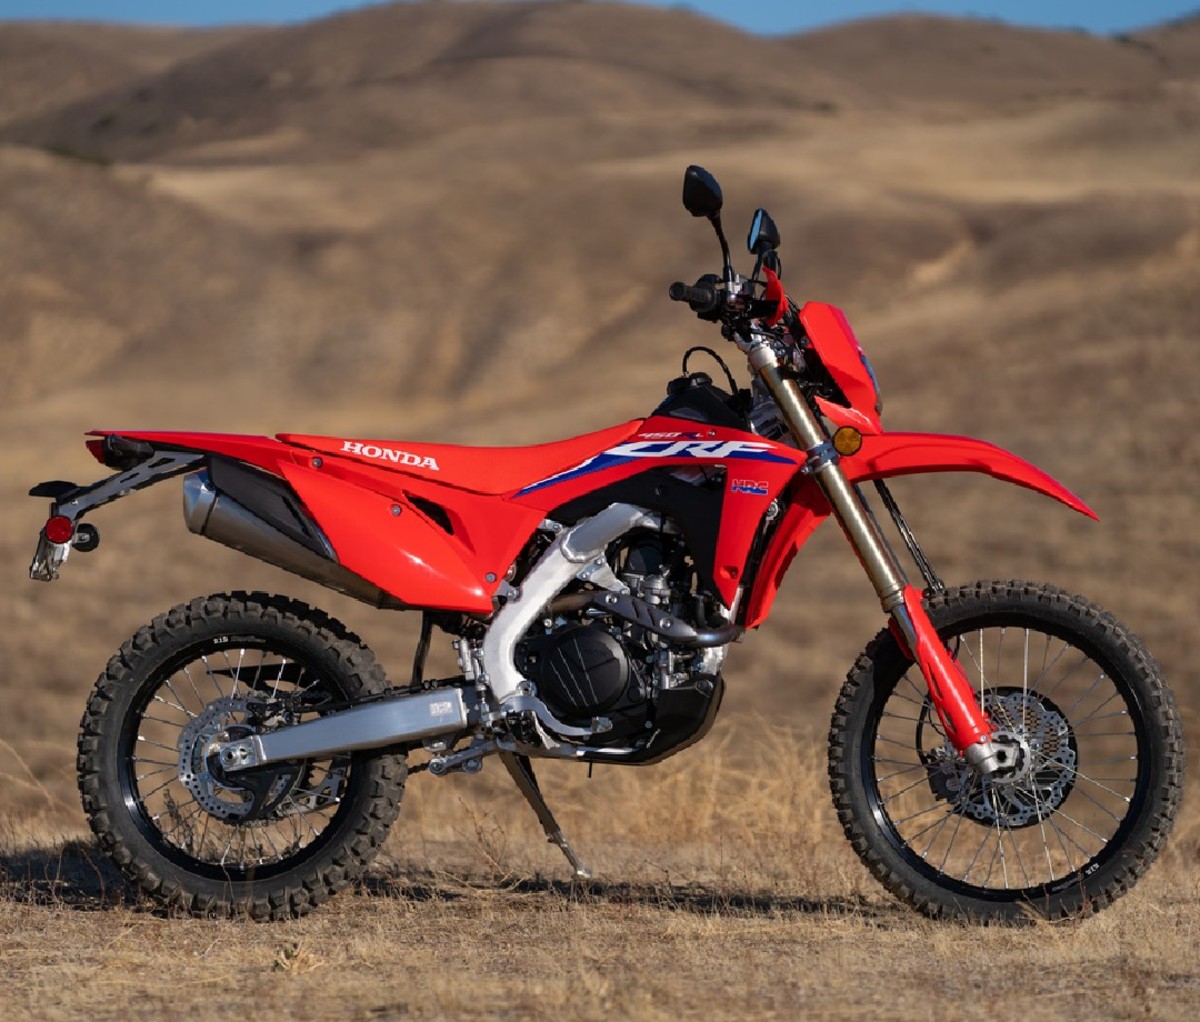 Side profile of red dirt bike against desert landscape